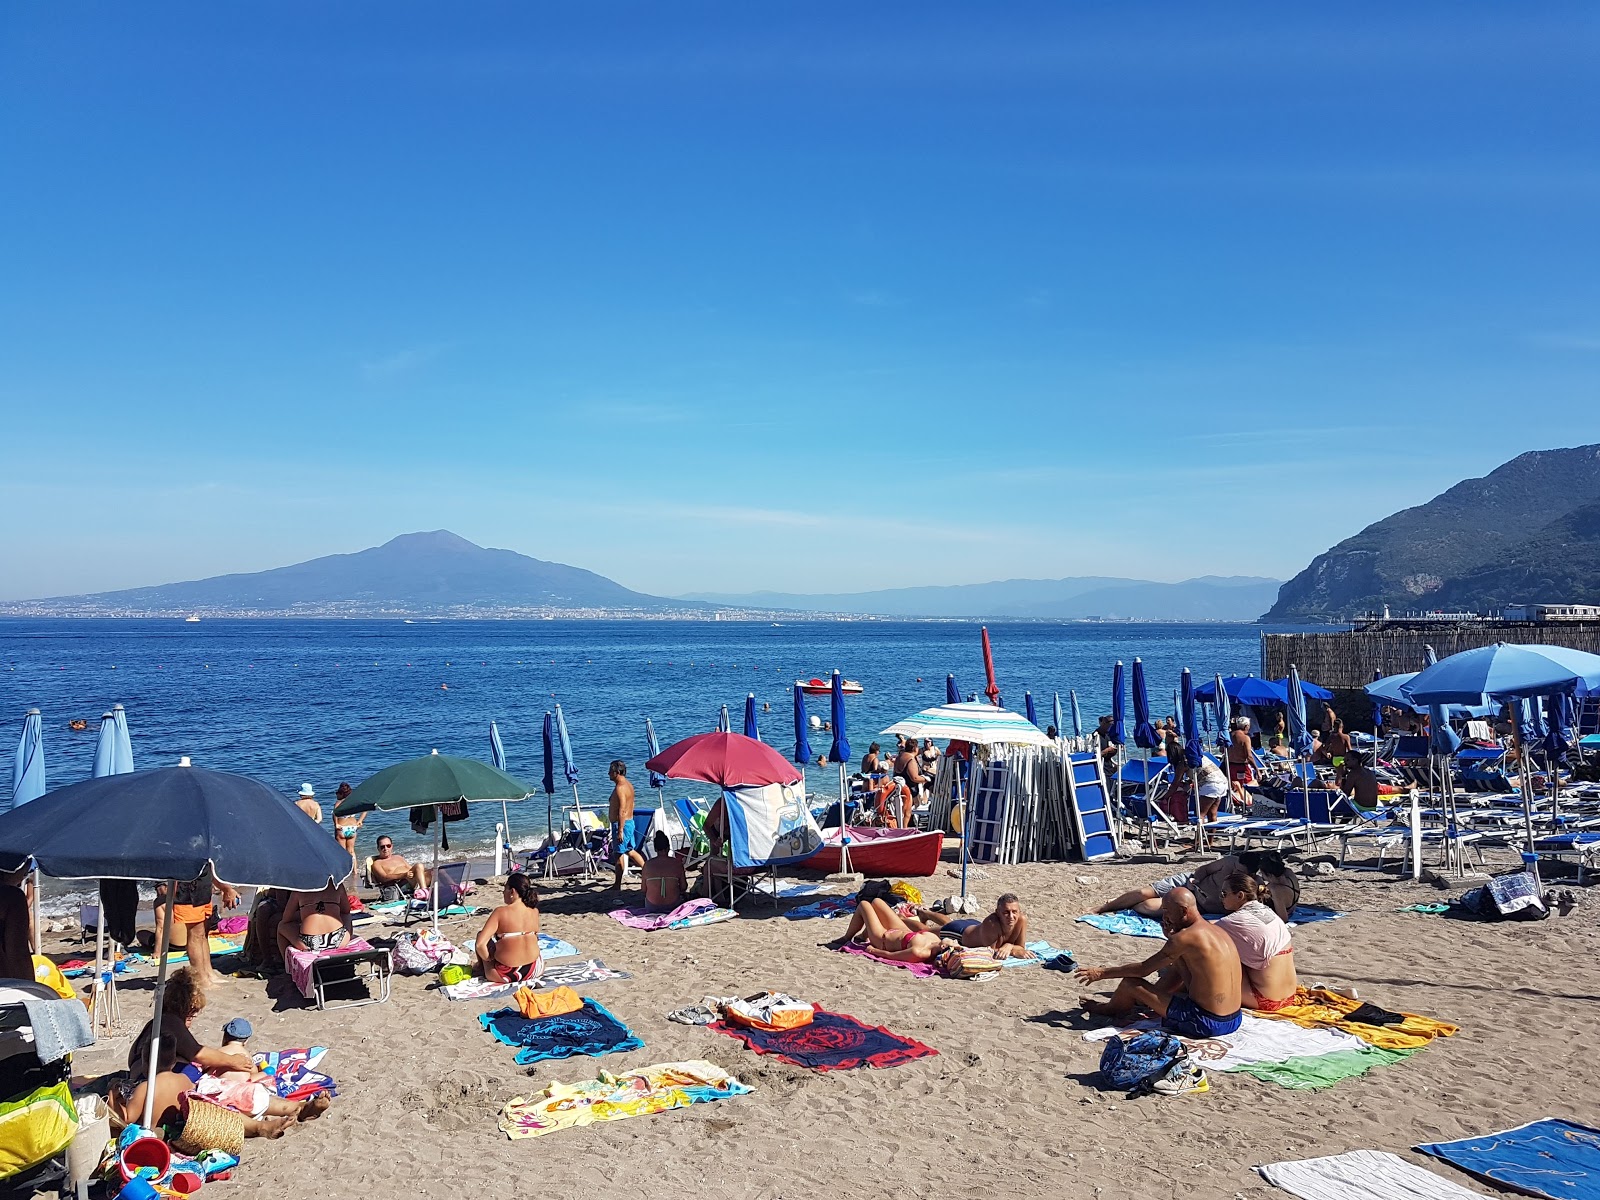 Foto van Spiaggia Seiano met gemiddeld niveau van netheid